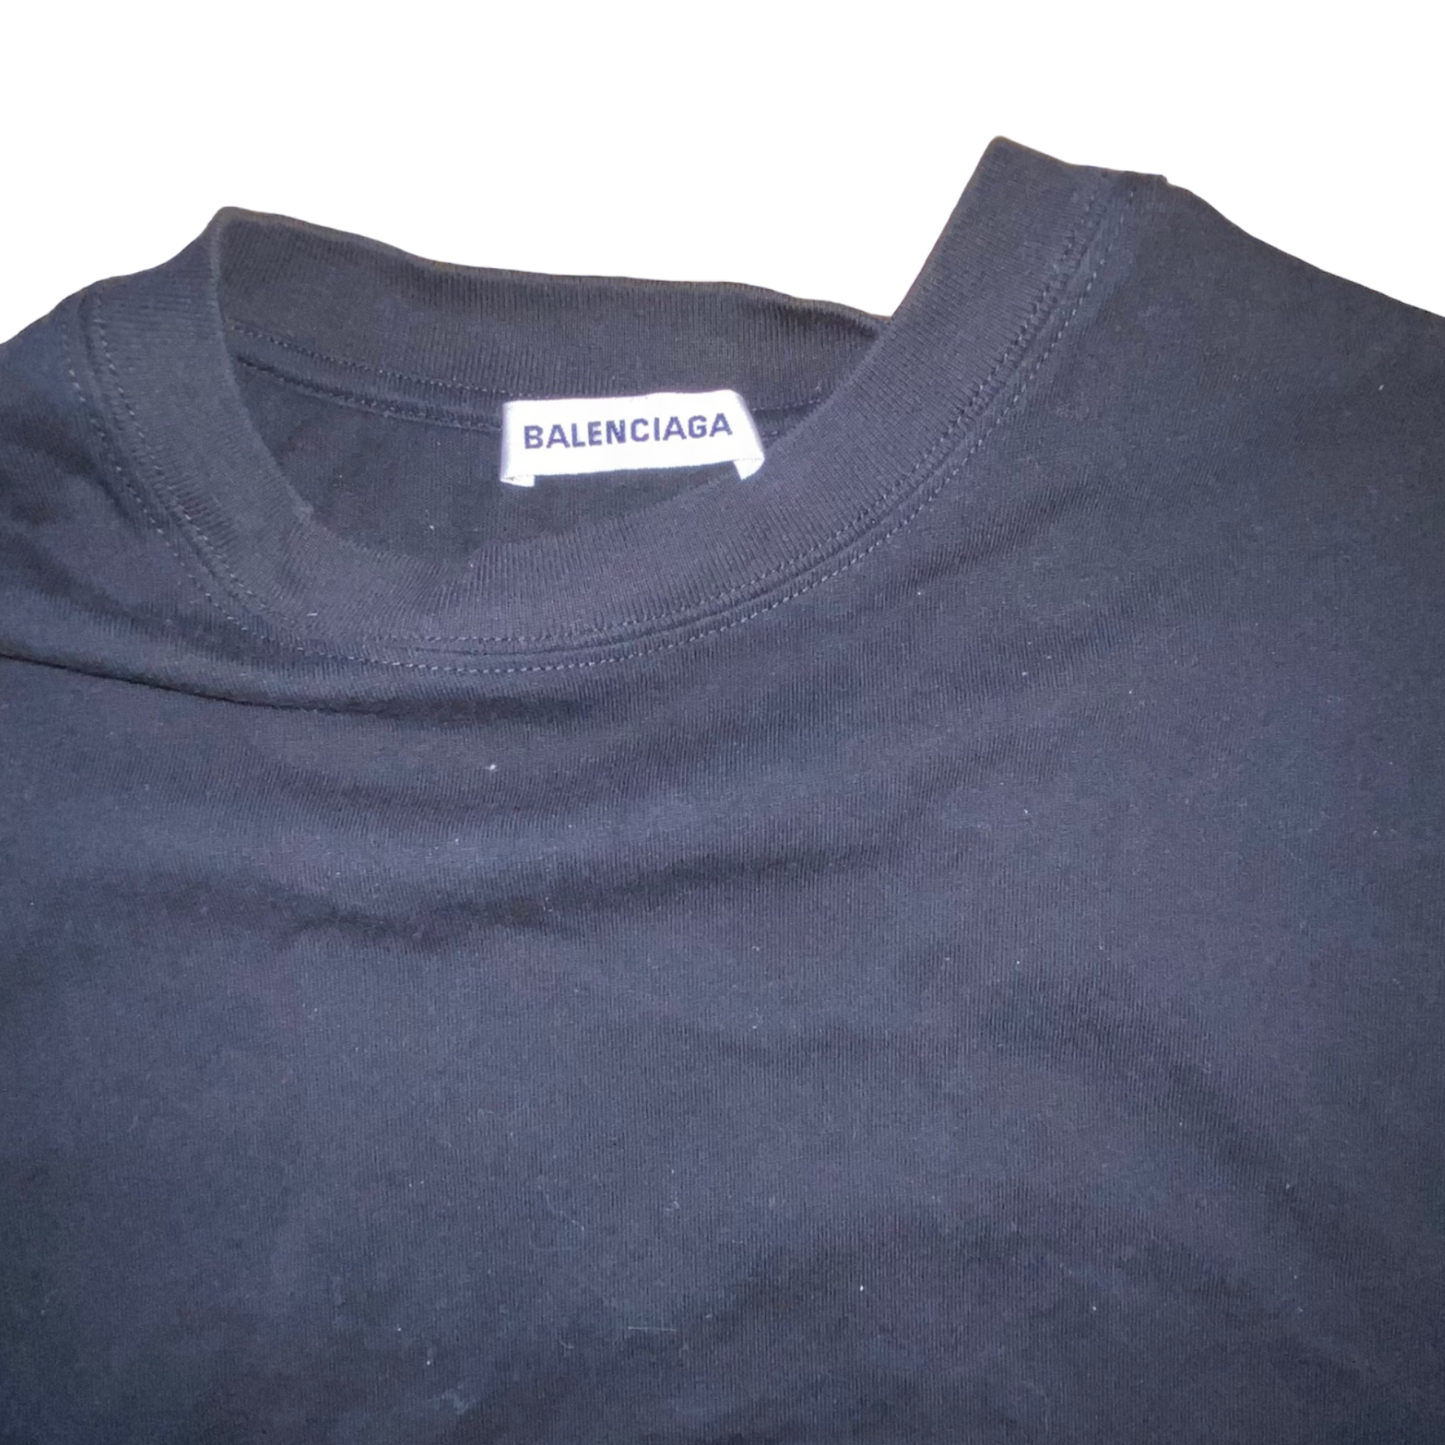 Balenciaga - I Love Techno Black T-Shirt